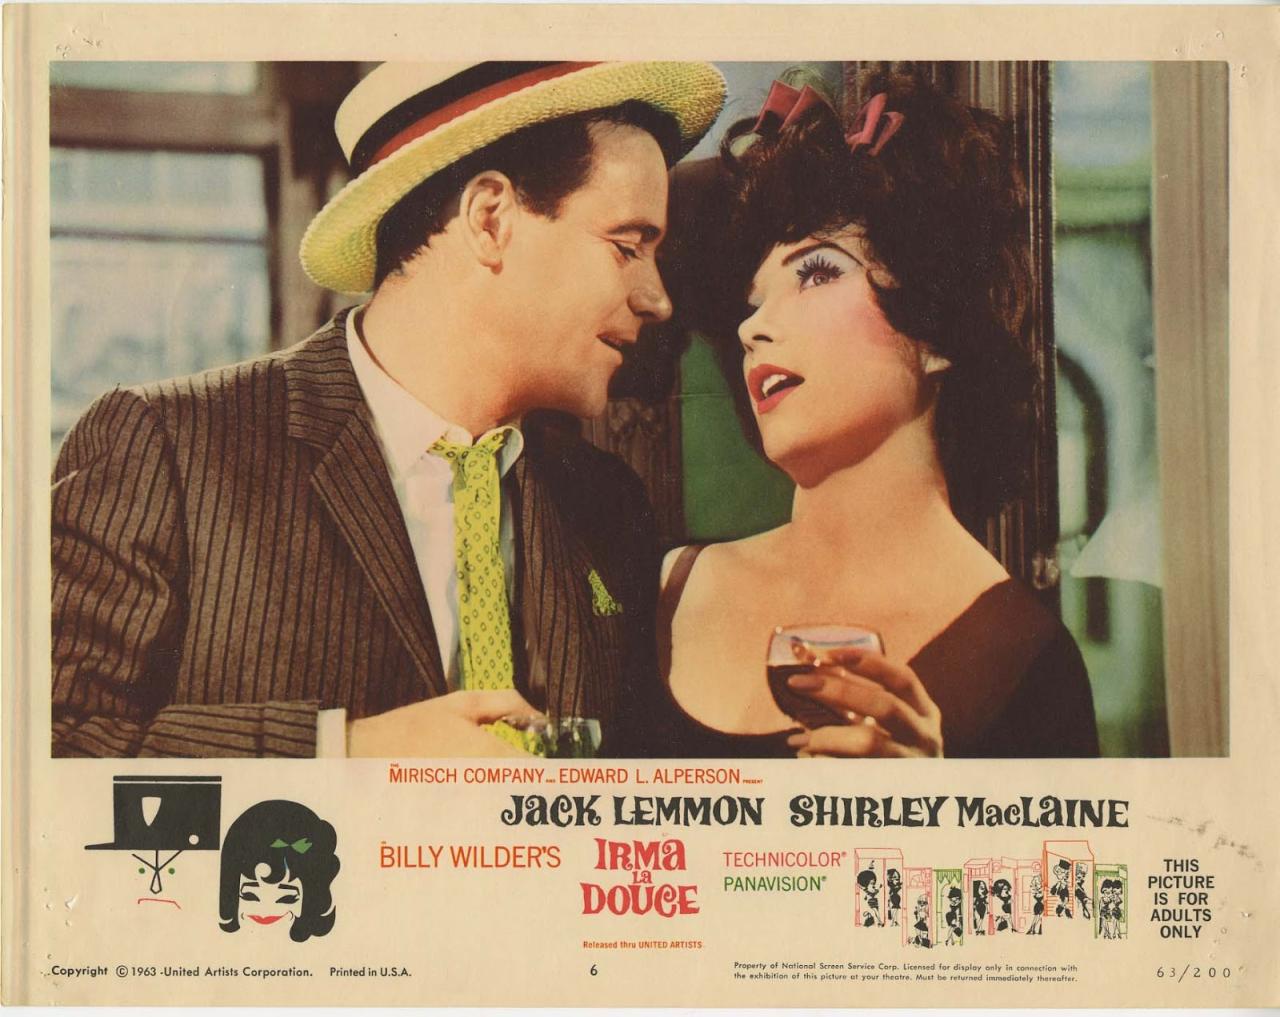 la dolce, film di billy wilder con jack lemmon (1963)